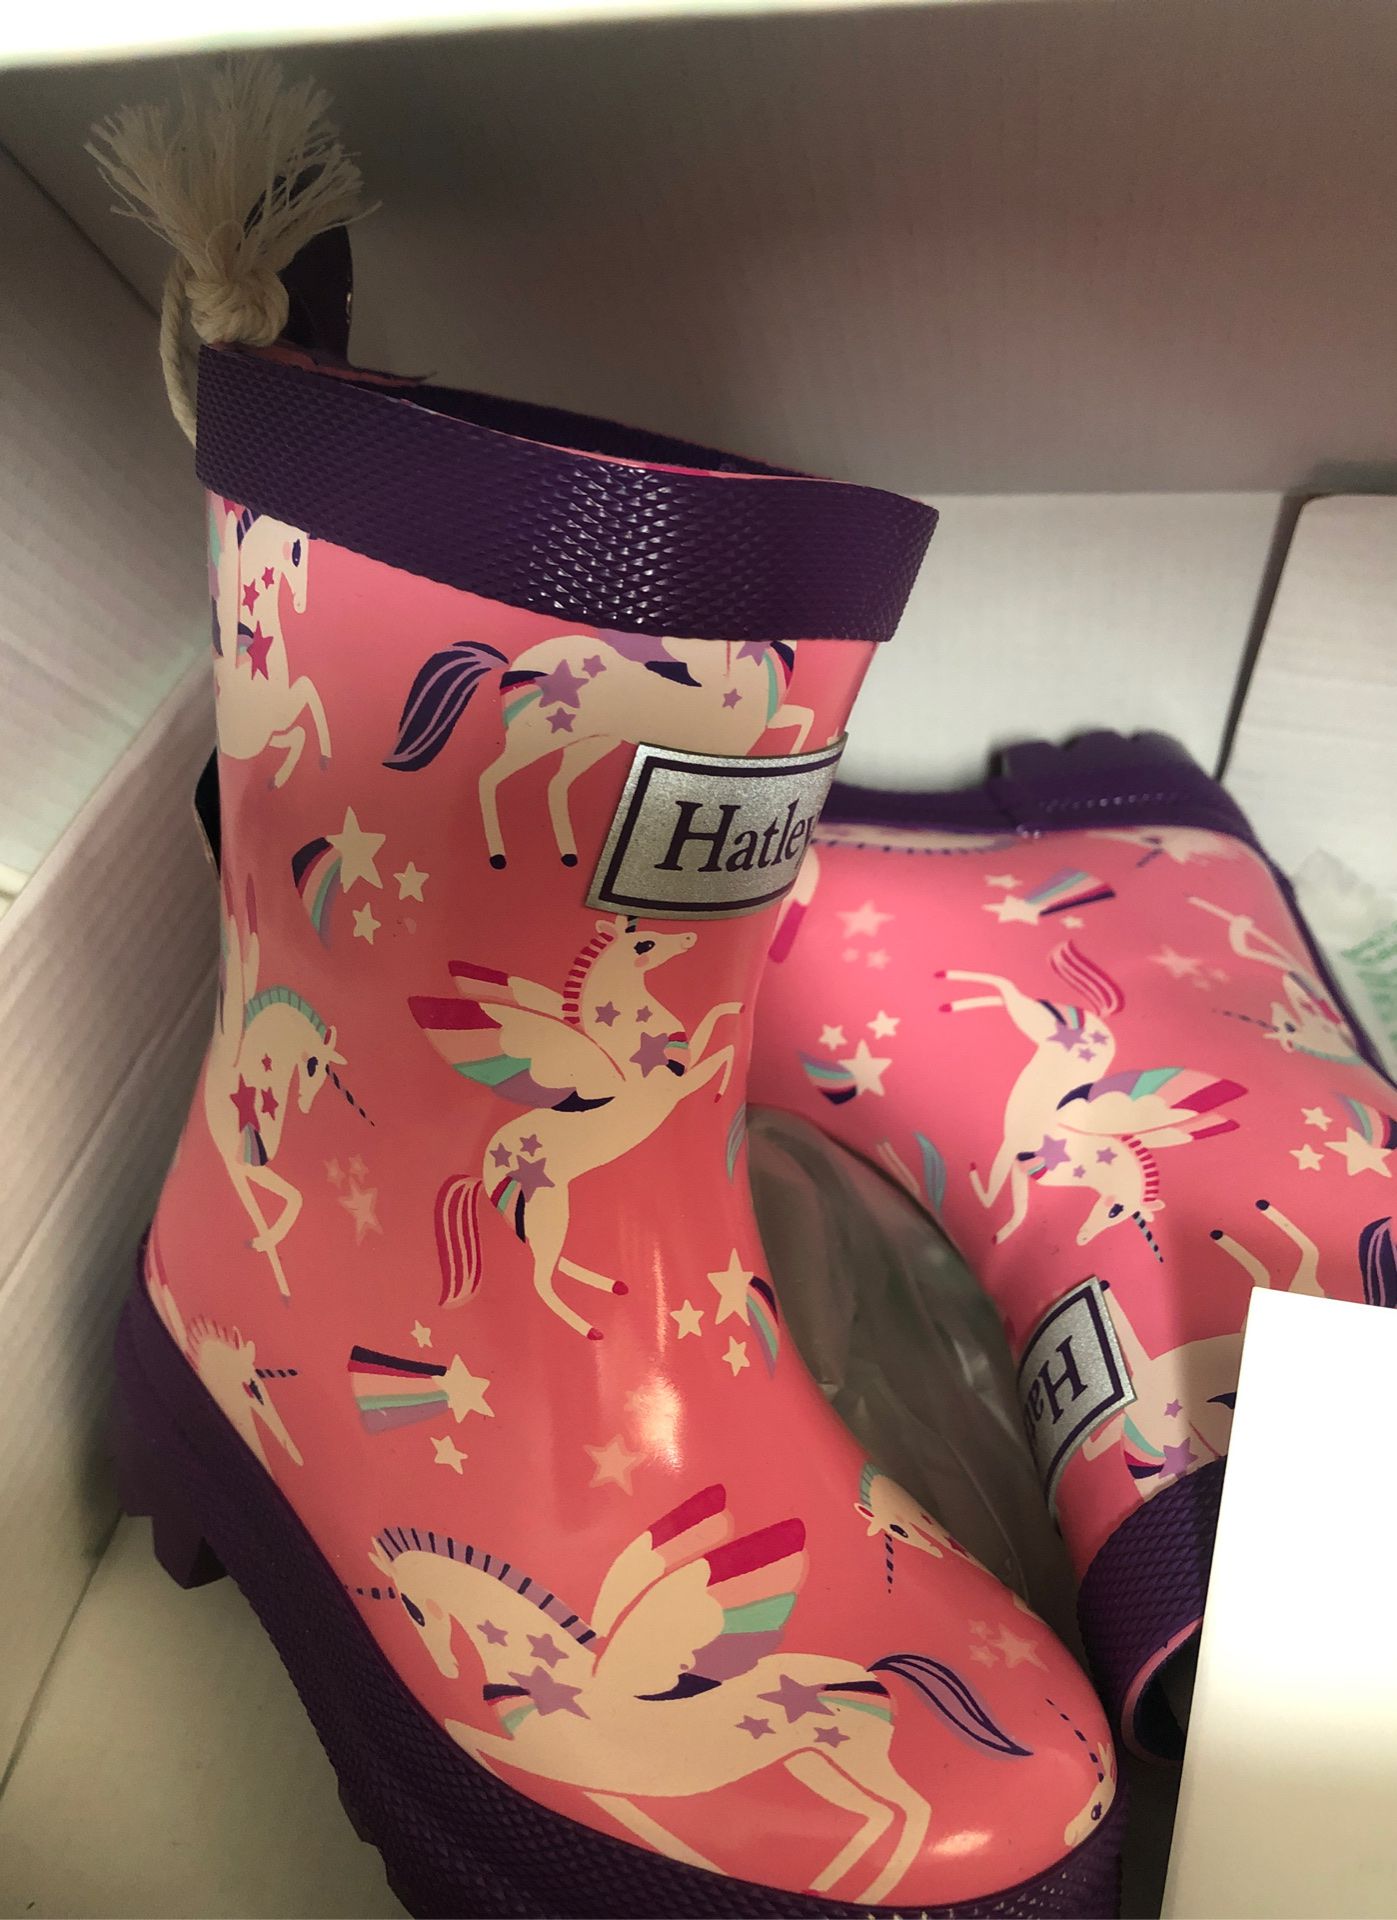 Hatley rain boots (still in the original box) Pink/purple- Unicorns